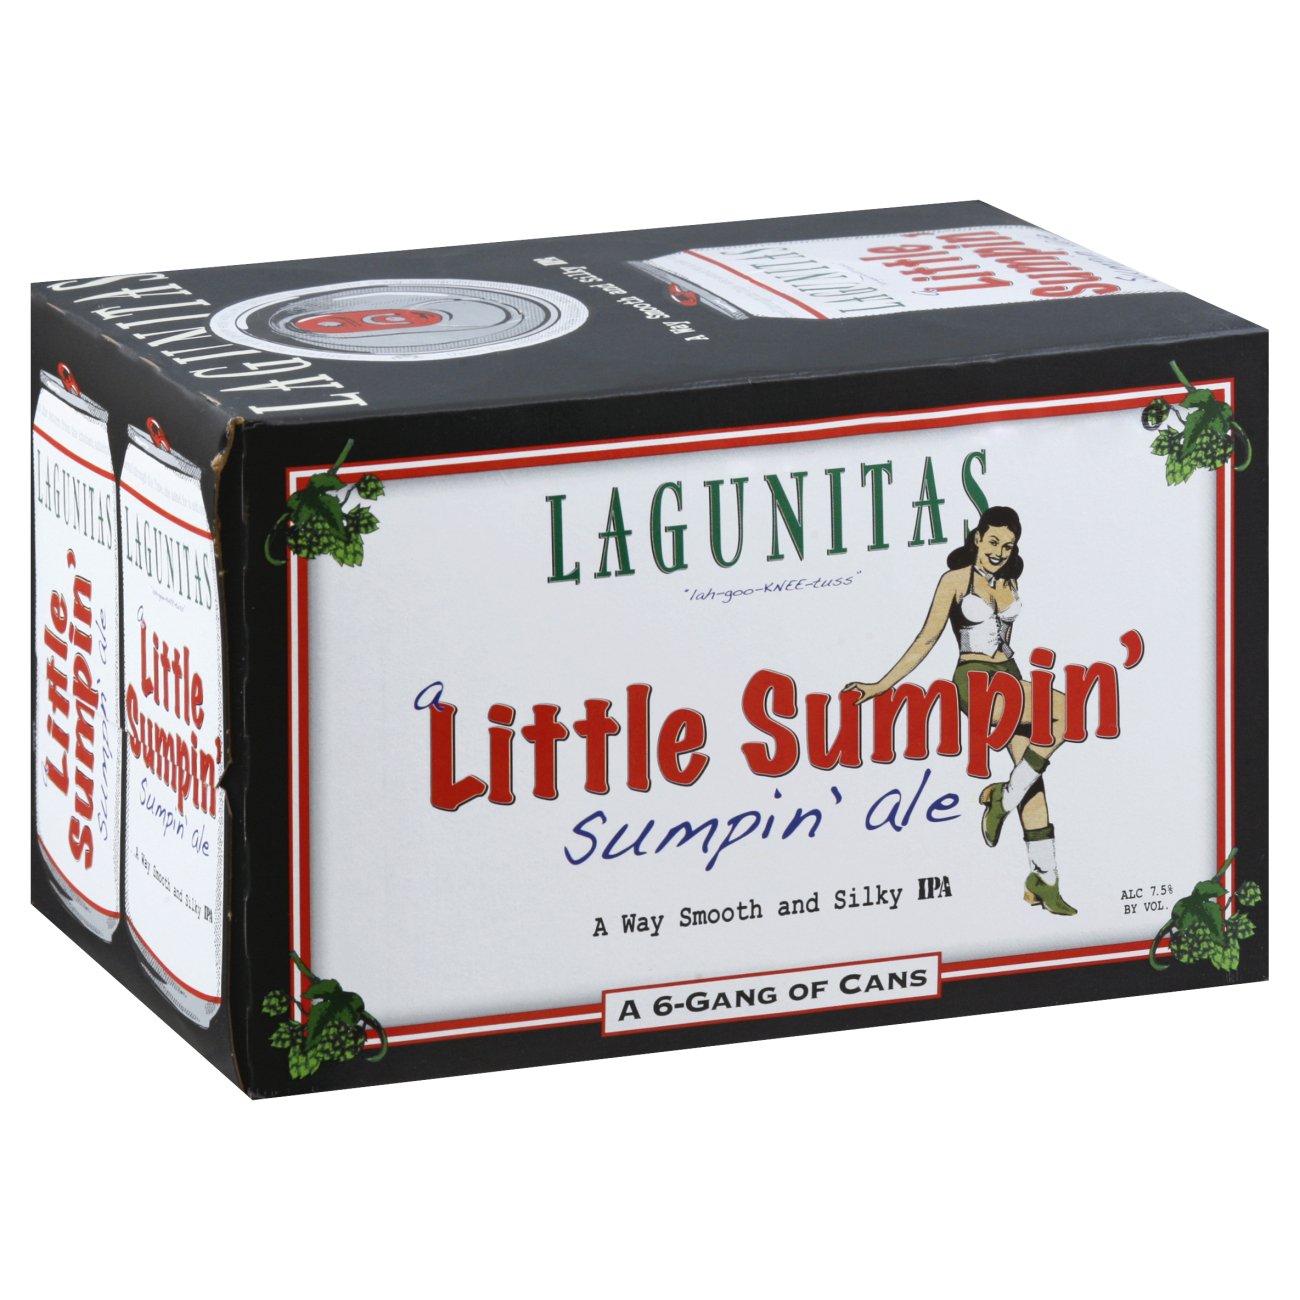 images/beer/IPA BEER/Lagunitas A Little Sumpin Sumpin Ale.jpg